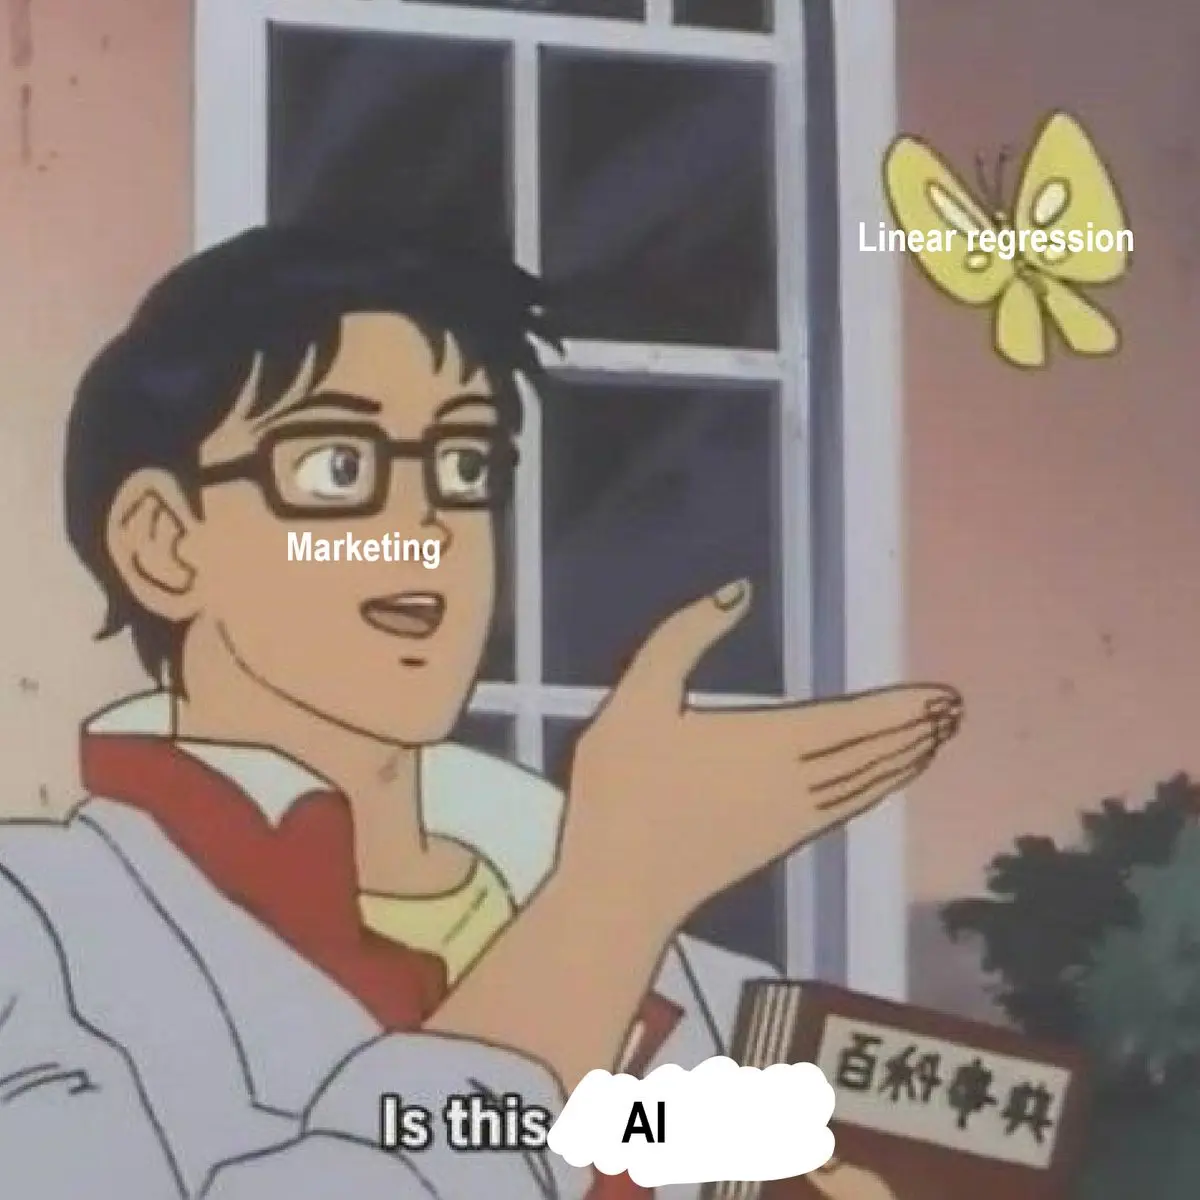 &ldquo;Is this AI?&rdquo; meme